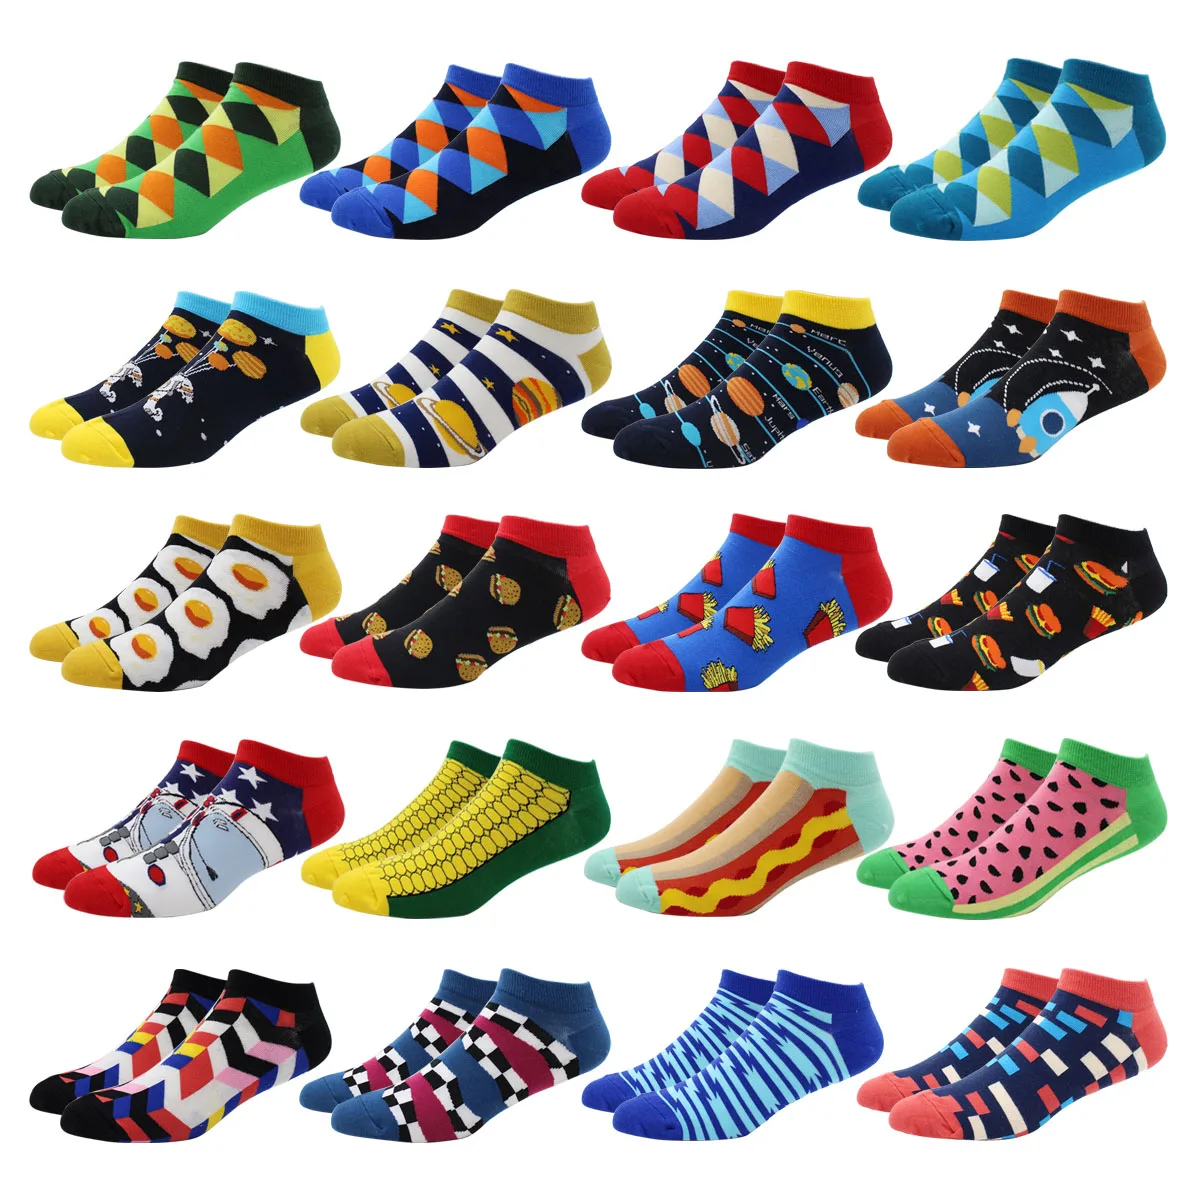 

5 Pairs Novelty Funny Casual Ankle Socks Fashion Colorful Harajuku Grid Space Cotton Men Socks Happy Men Socks Size EU39-46